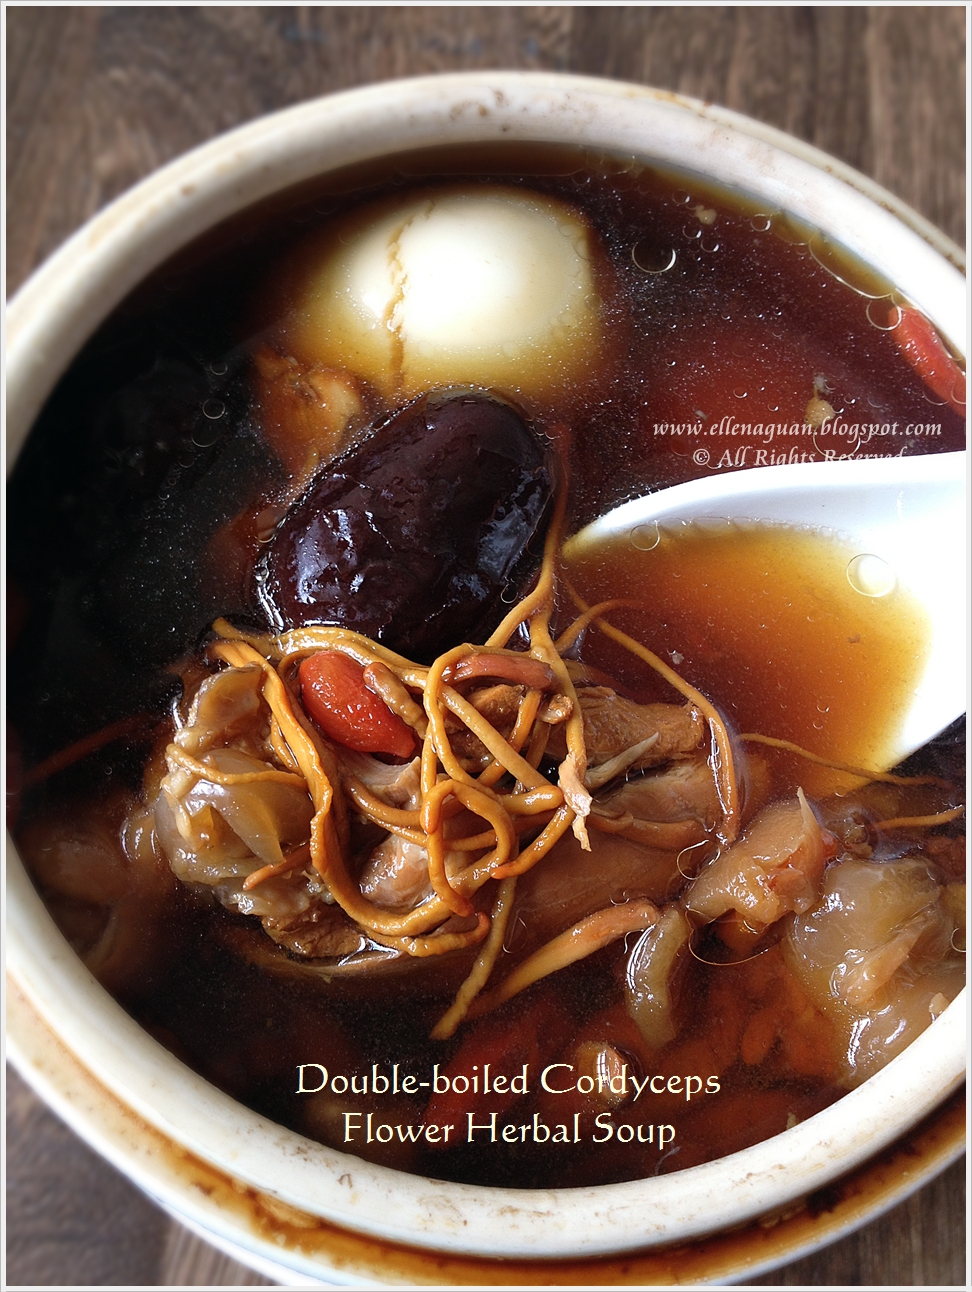 Cuisine Paradise | Singapore Food Blog | Recipes, Reviews ...